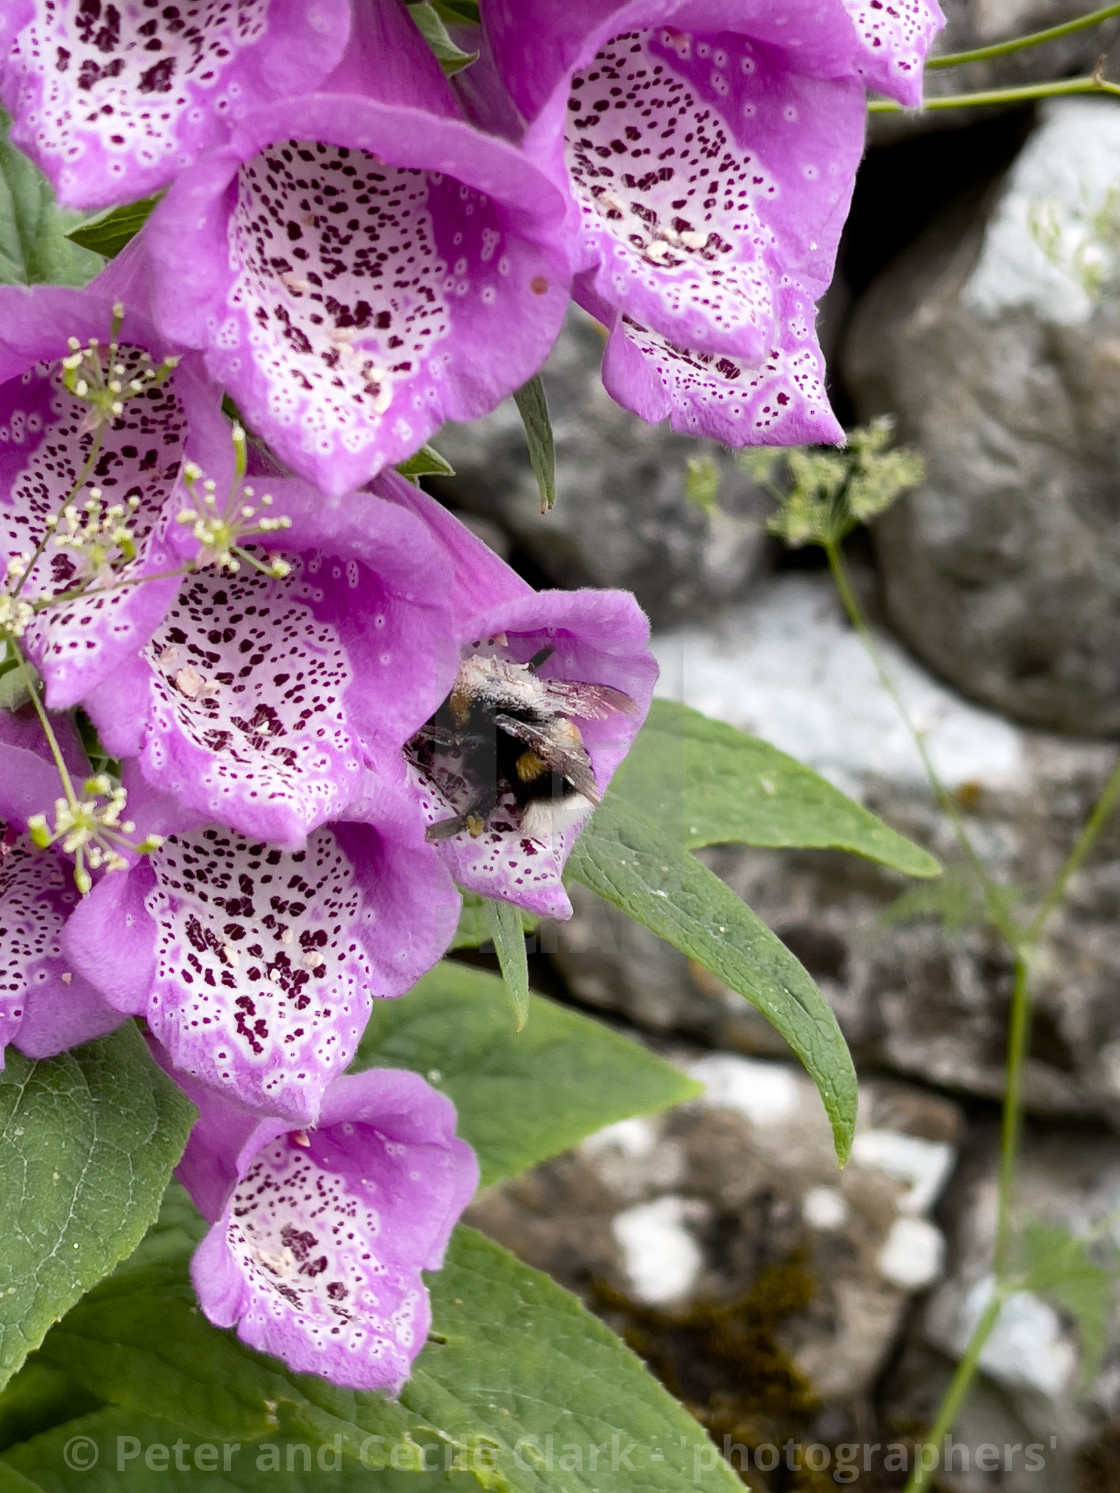 "Bumblebee in Foxglove Flower, Grassington, Yorkshire Dales." stock image